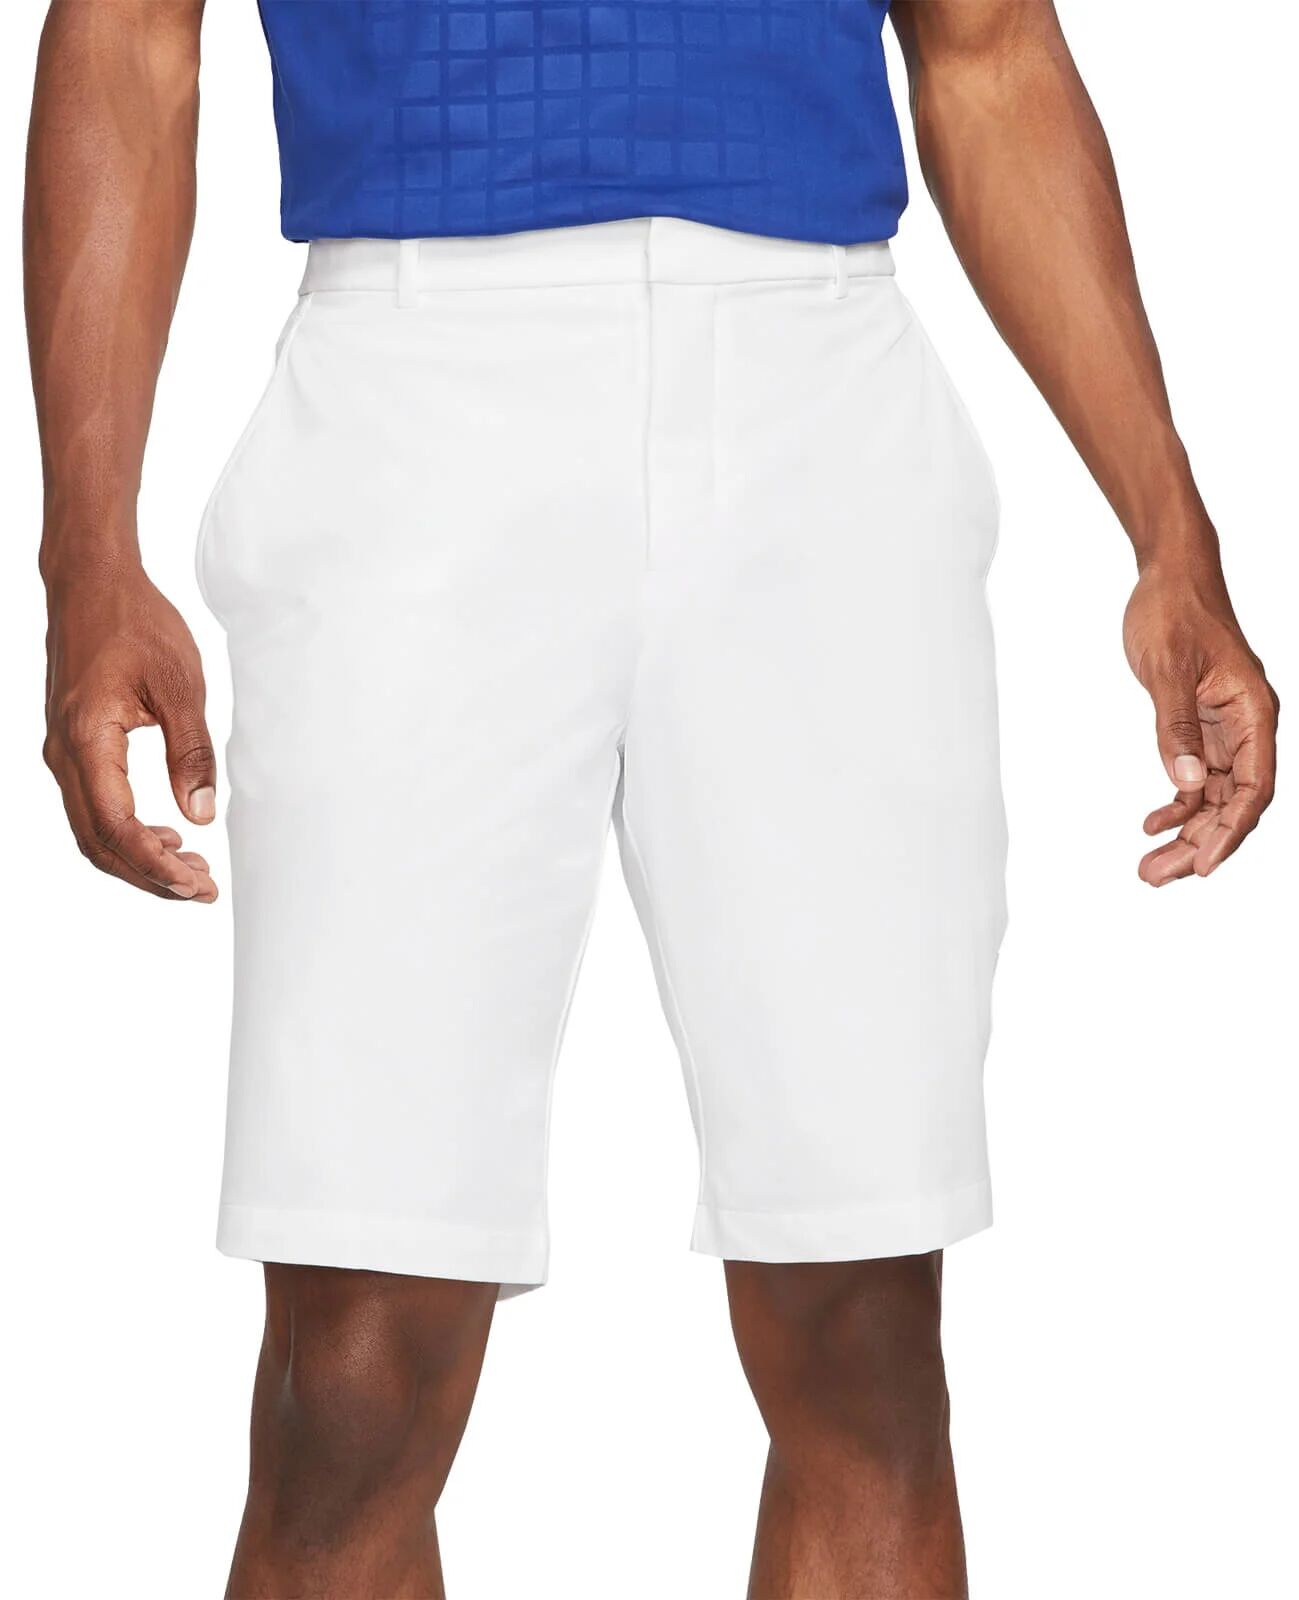 Nike Dri-FIT Men's Golf Shorts - White, Size: 36